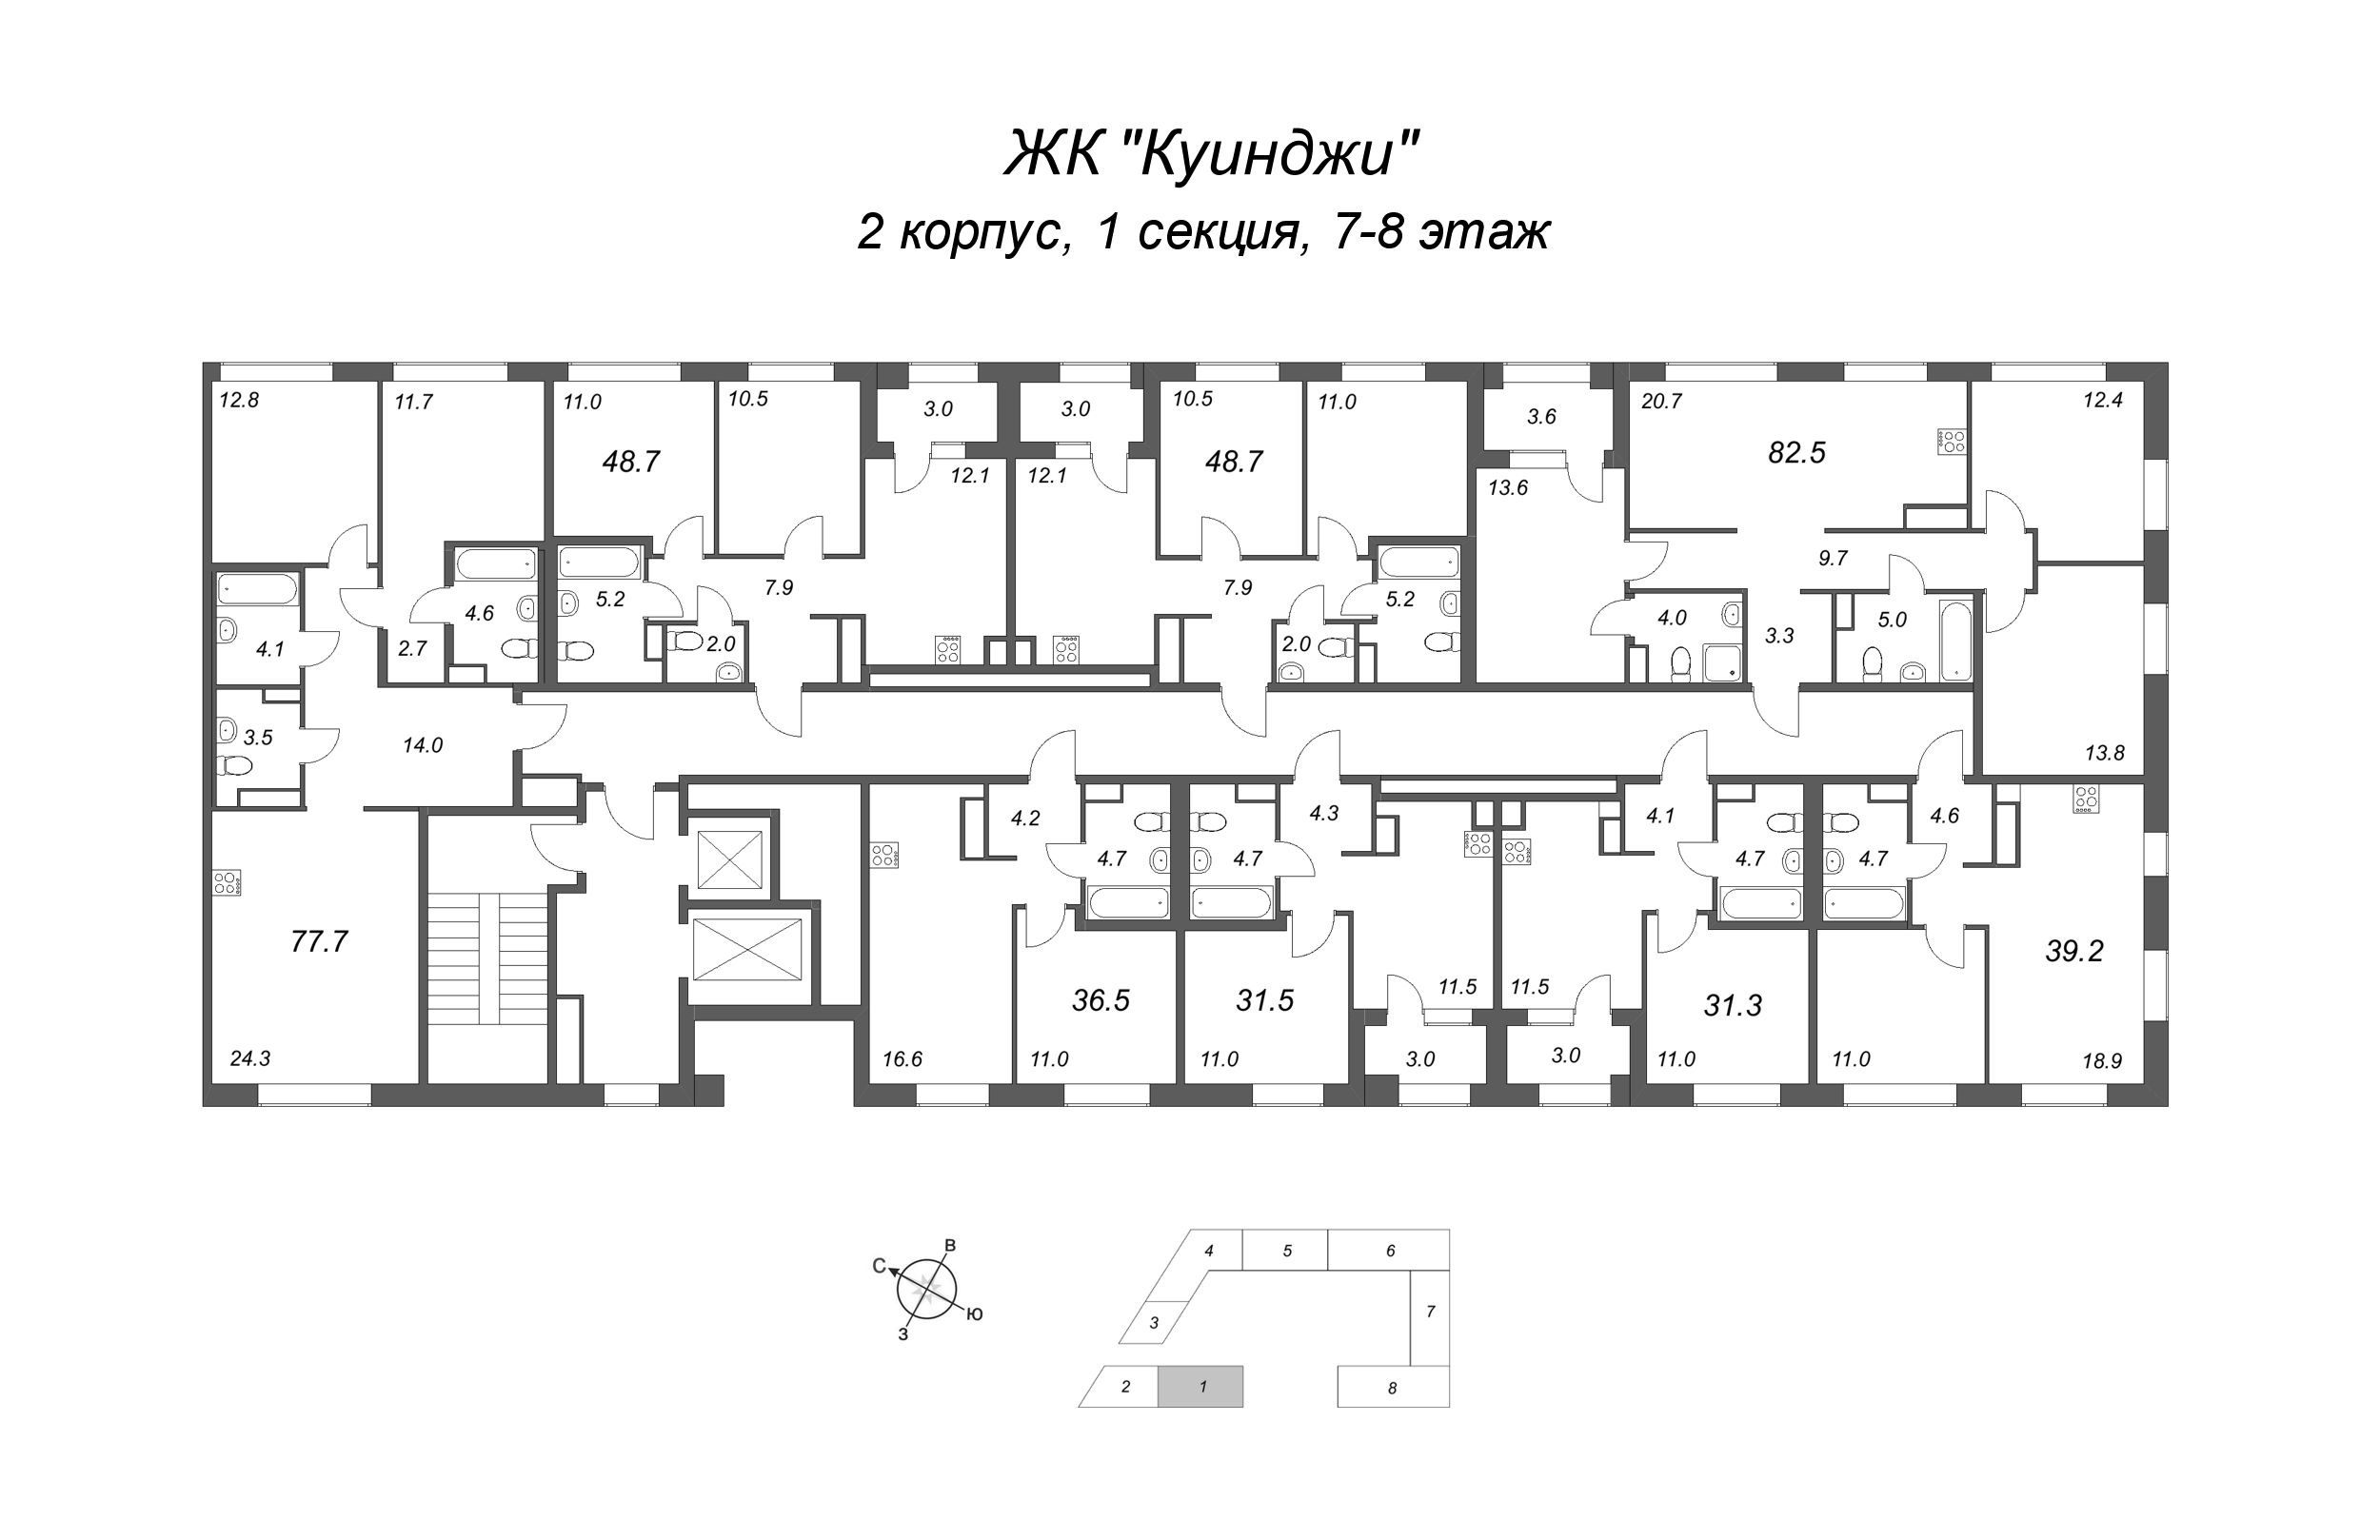 3-комнатная (Евро) квартира, 77.7 м² в ЖК "Куинджи" - планировка этажа